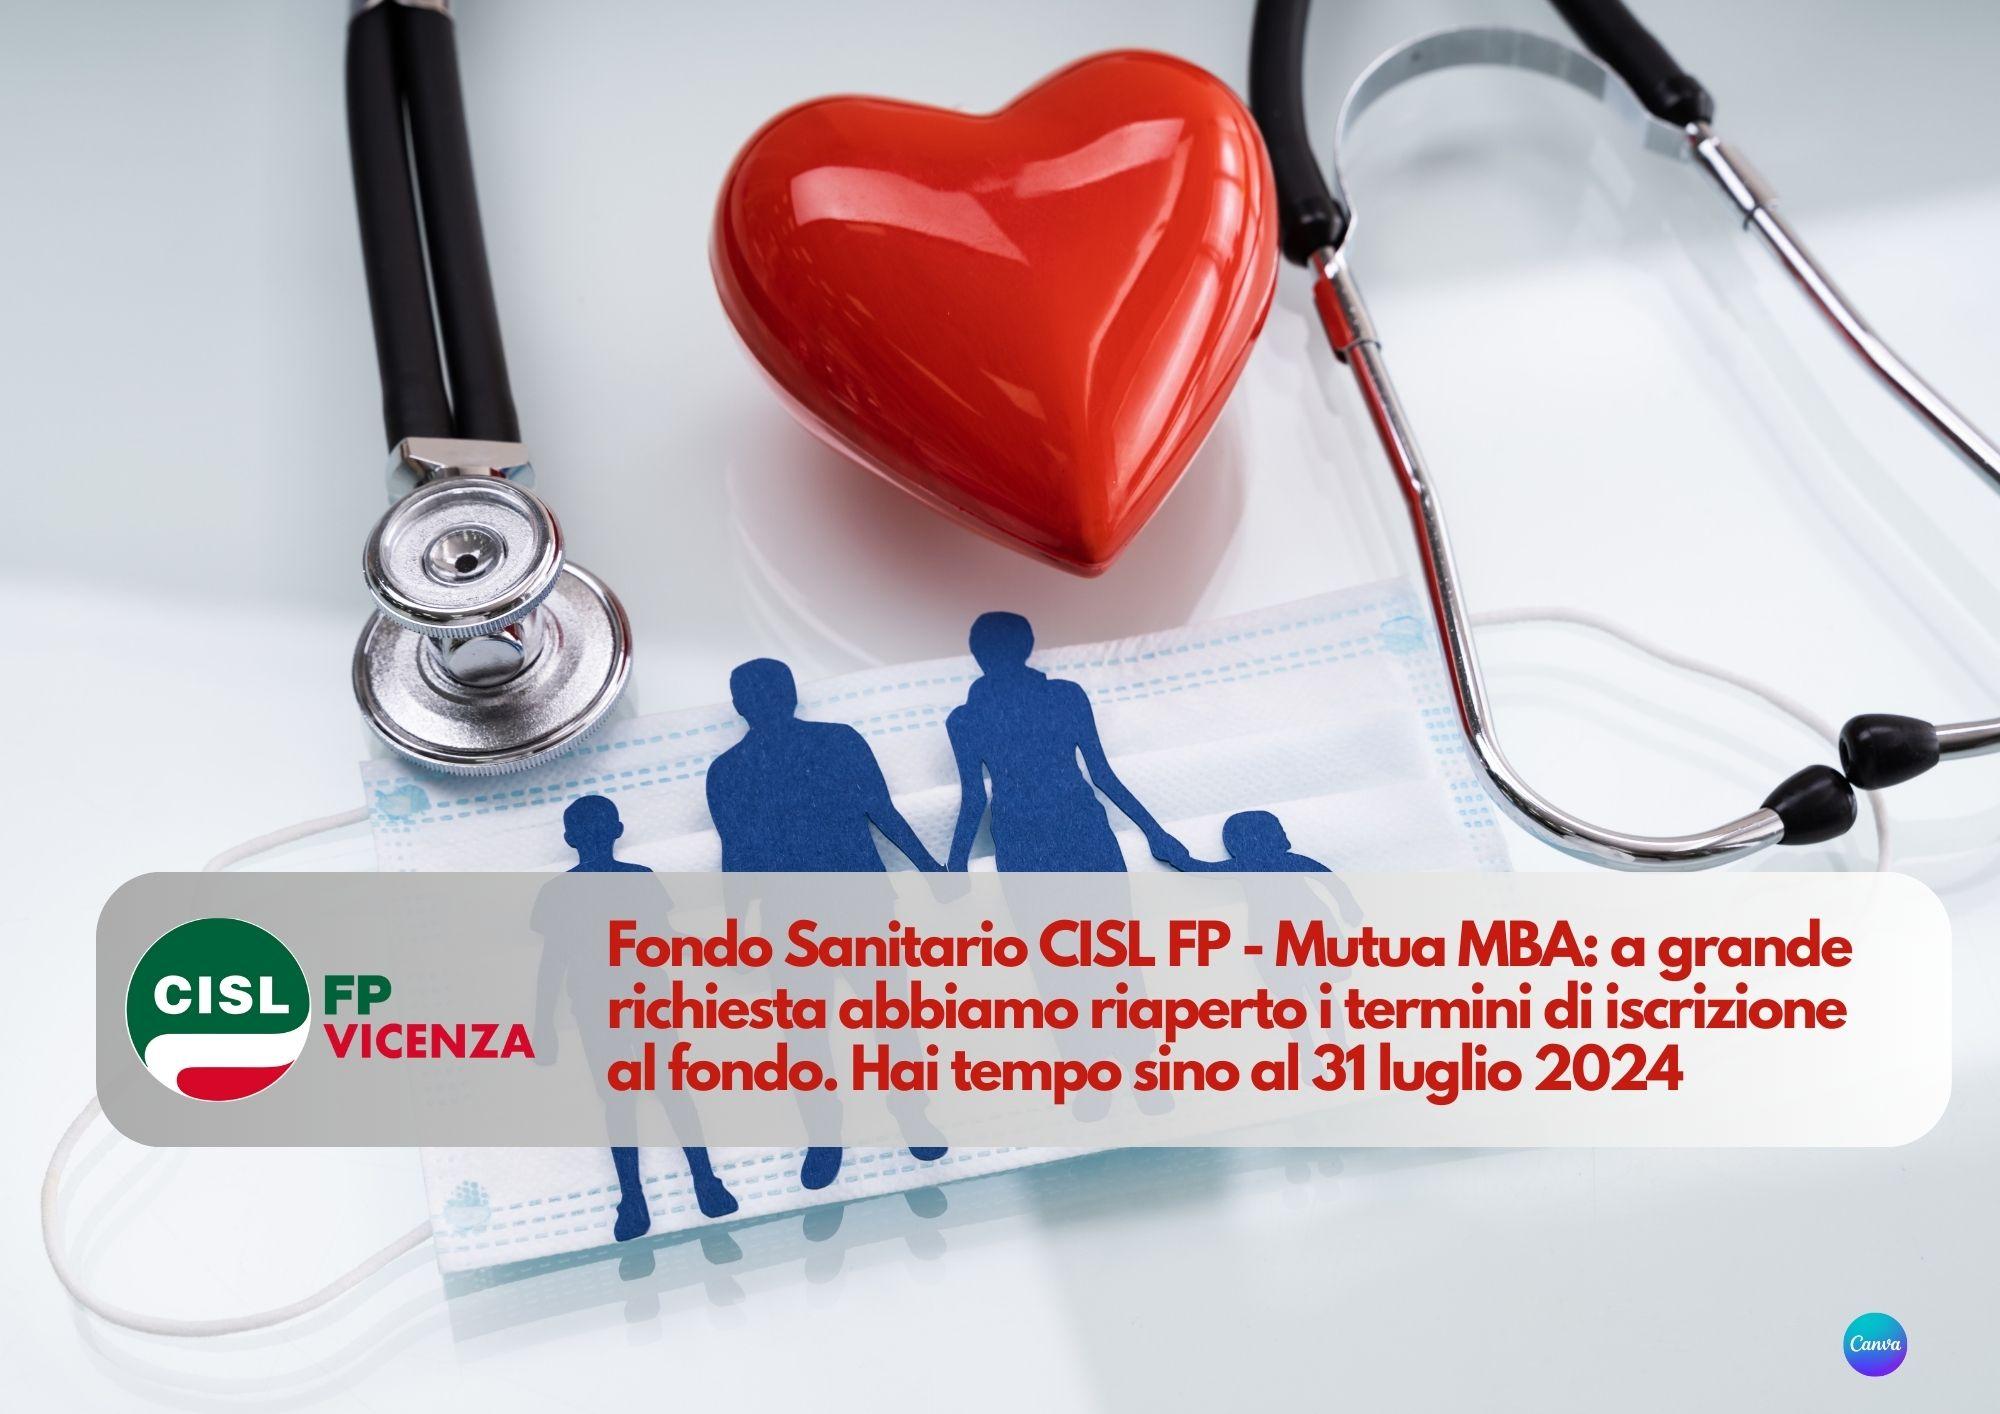 CISL FP Vicenza. Fondo Sanitario CISL FP - Mutua MBA: apertura adesione straordinaria